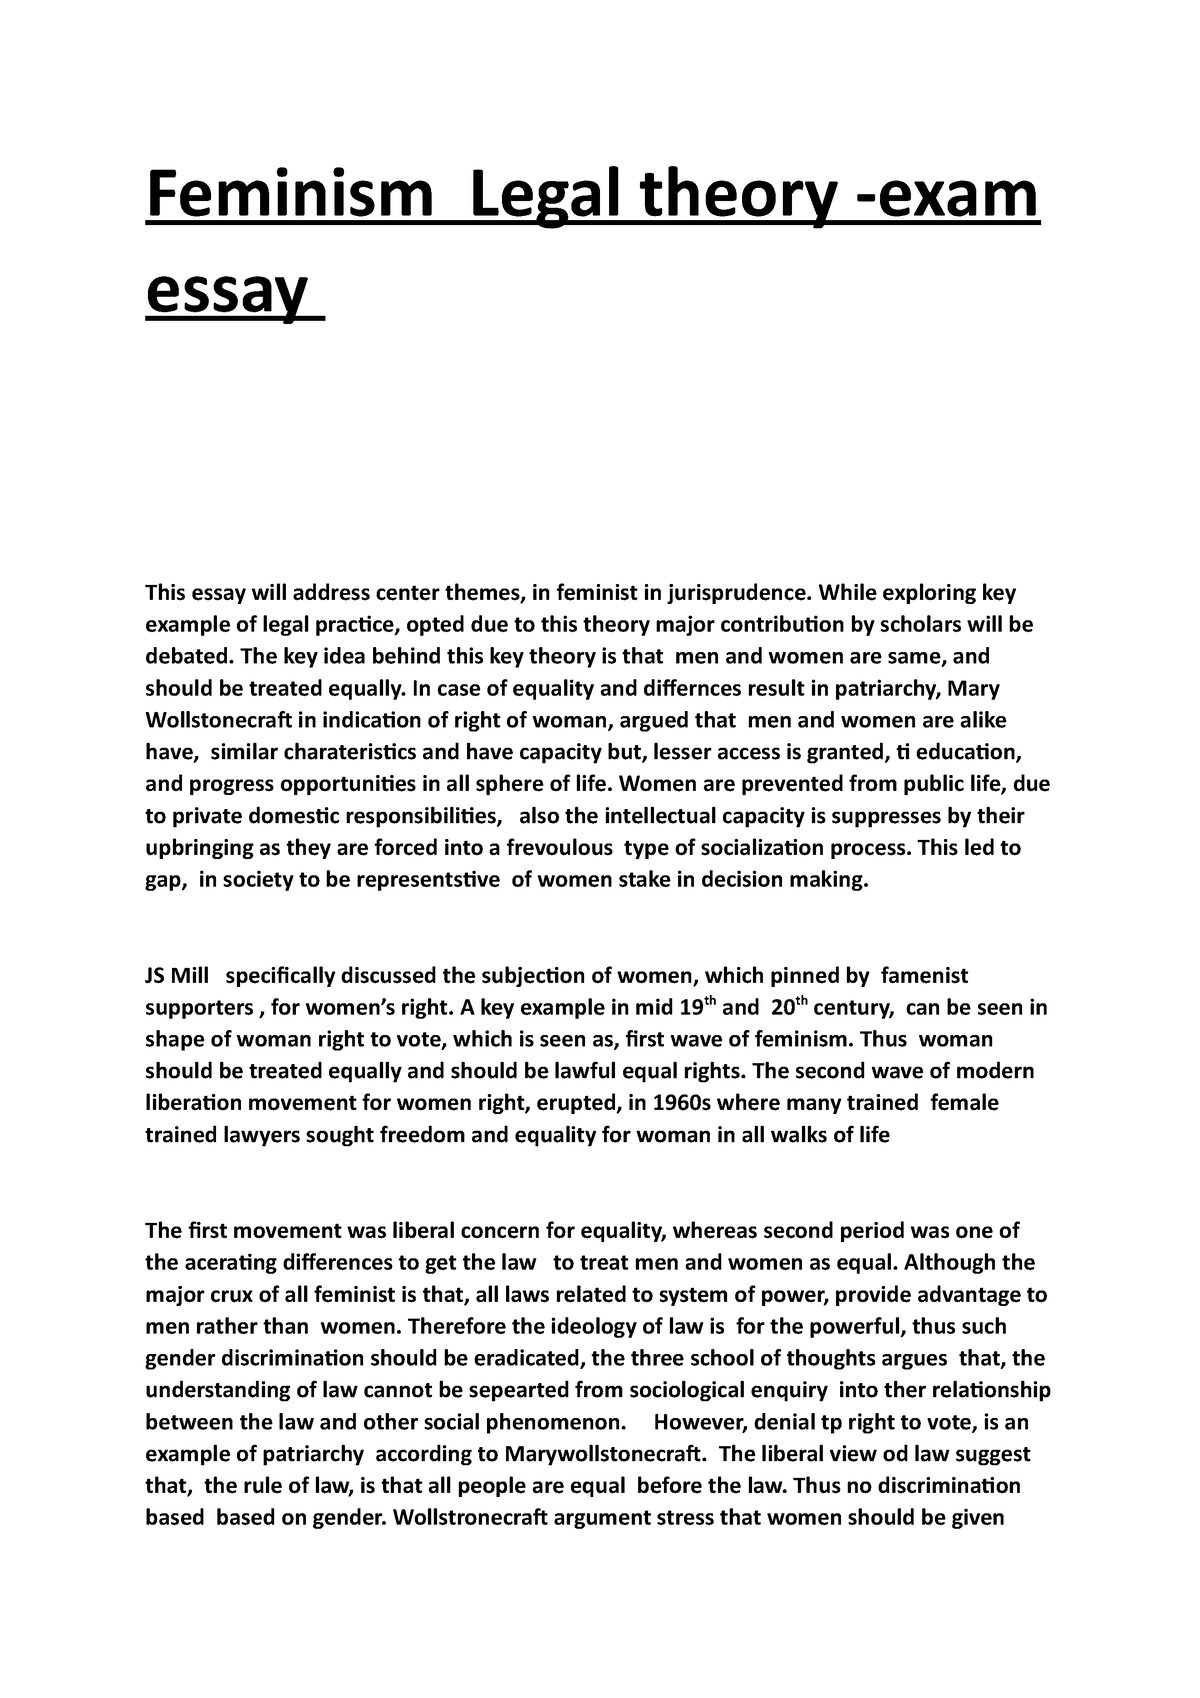 analytical essay on feminism